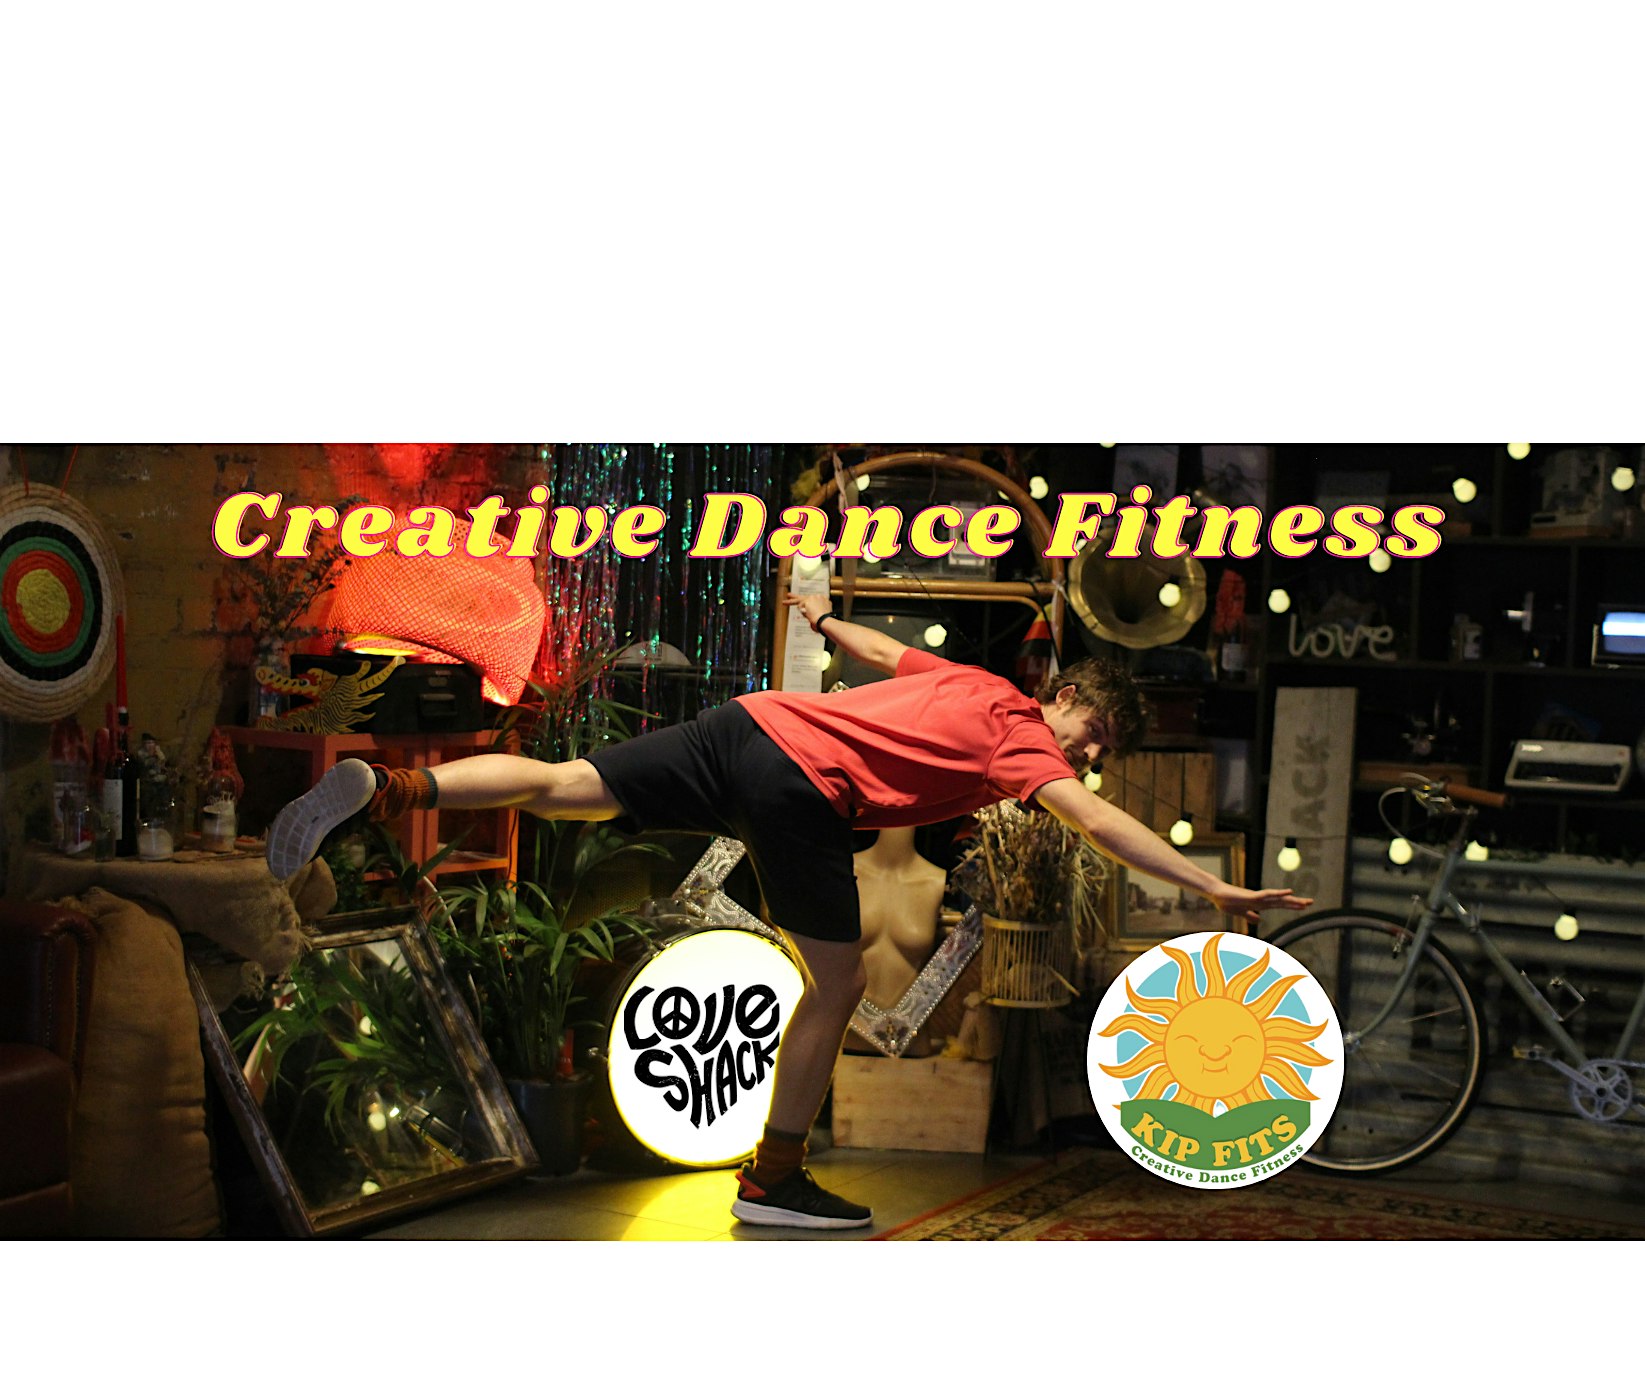 Kipfits - Creative Dance Fitness